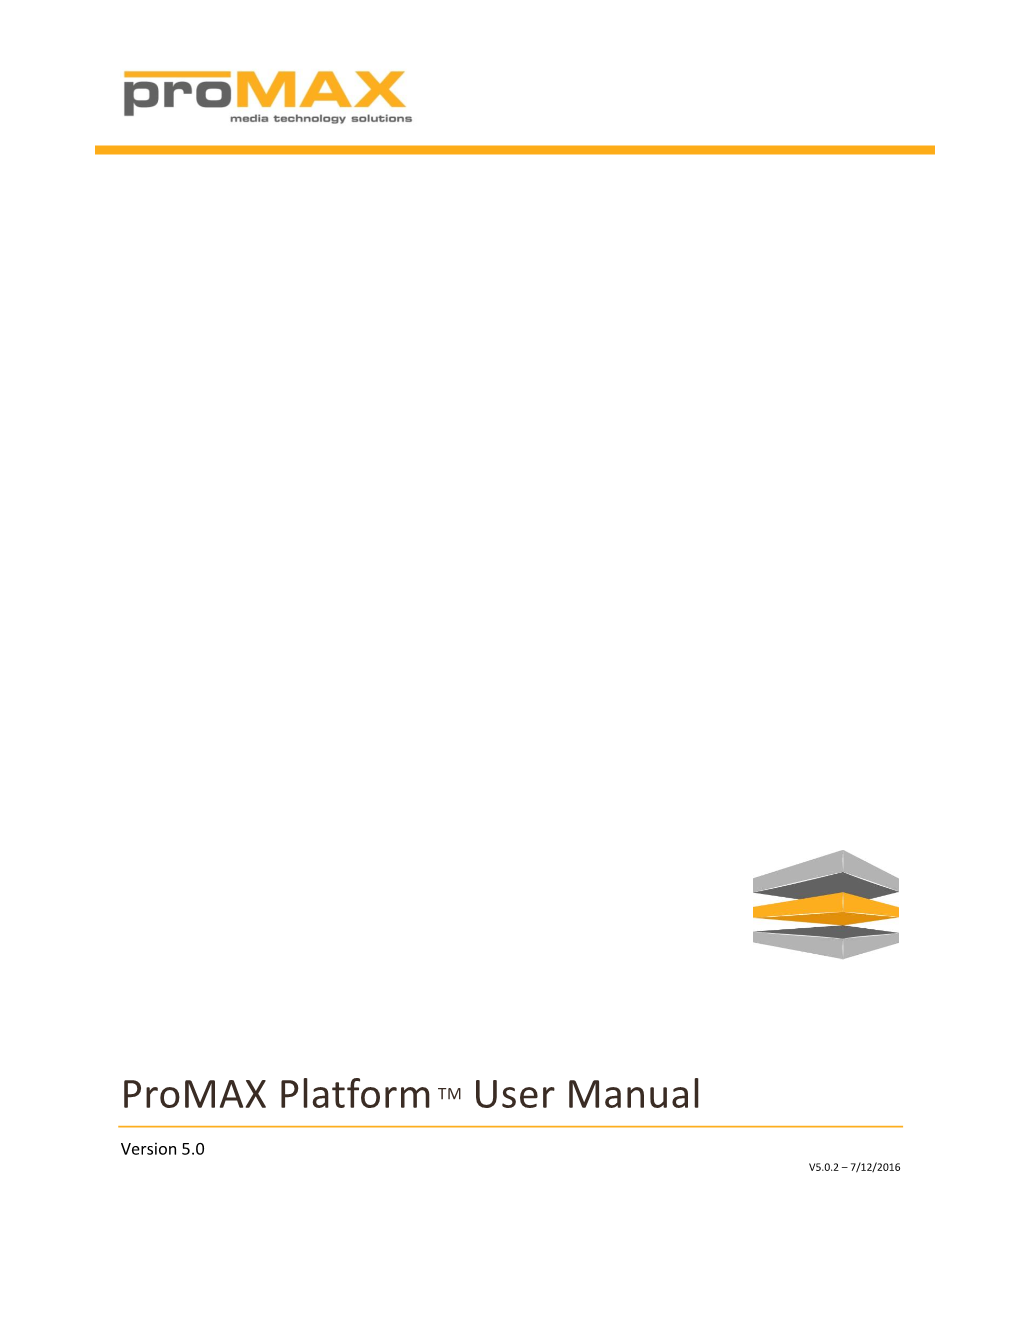 Promax Platformtm User Manual